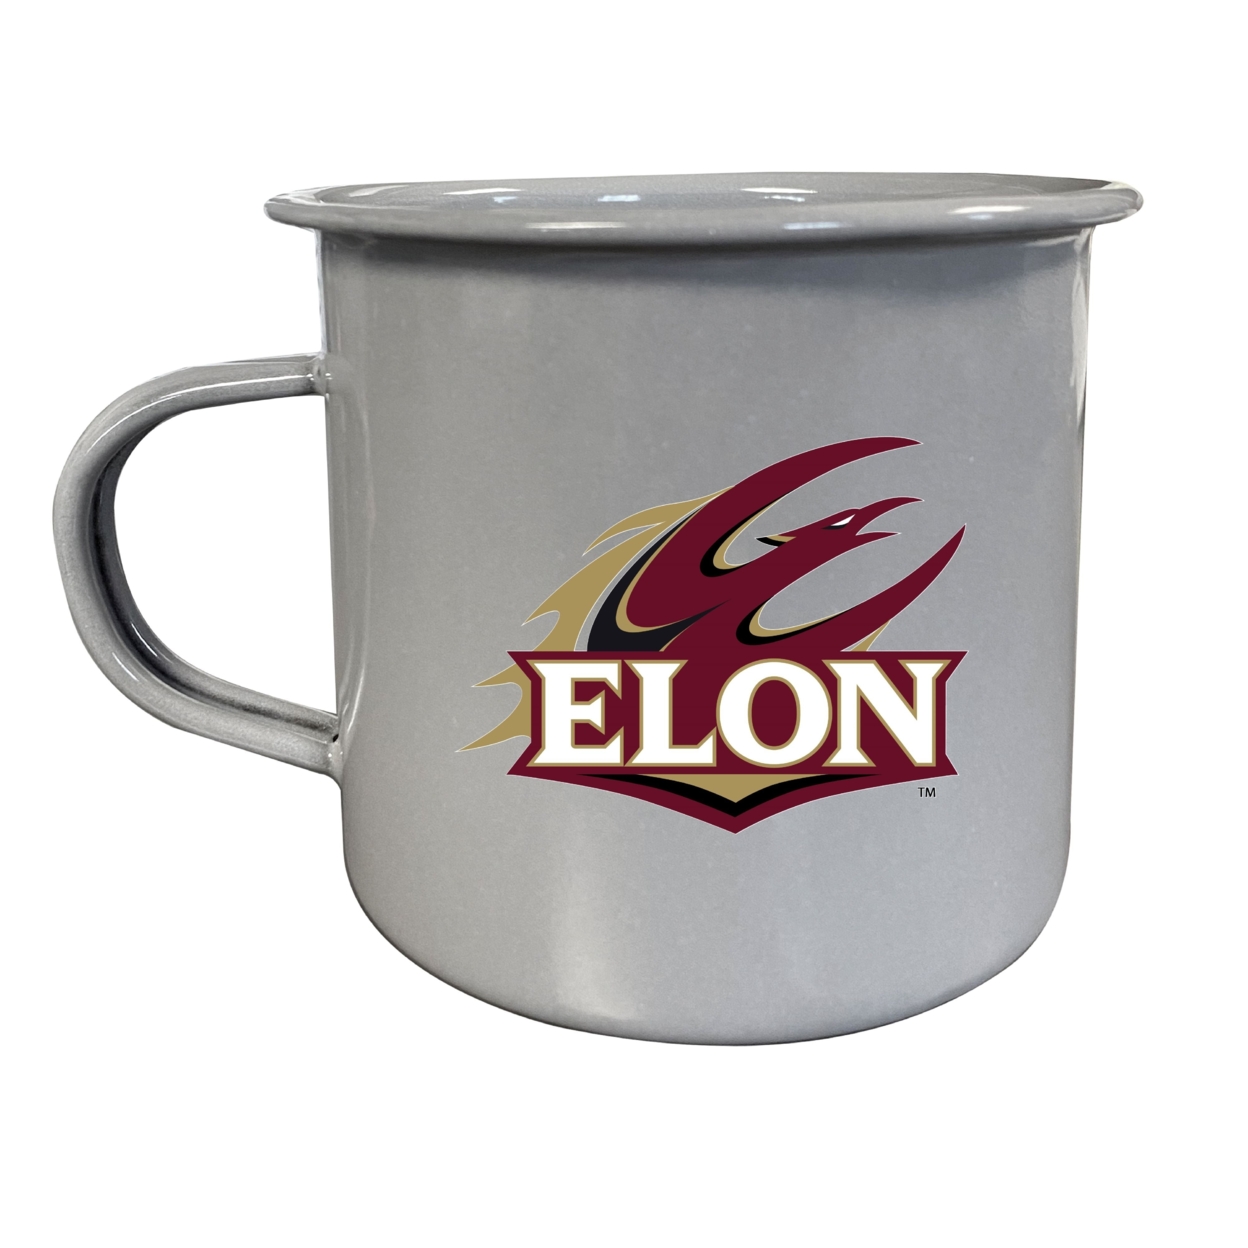 Elon University Tin Camper Coffee Mug - Choose Your Color - Gray